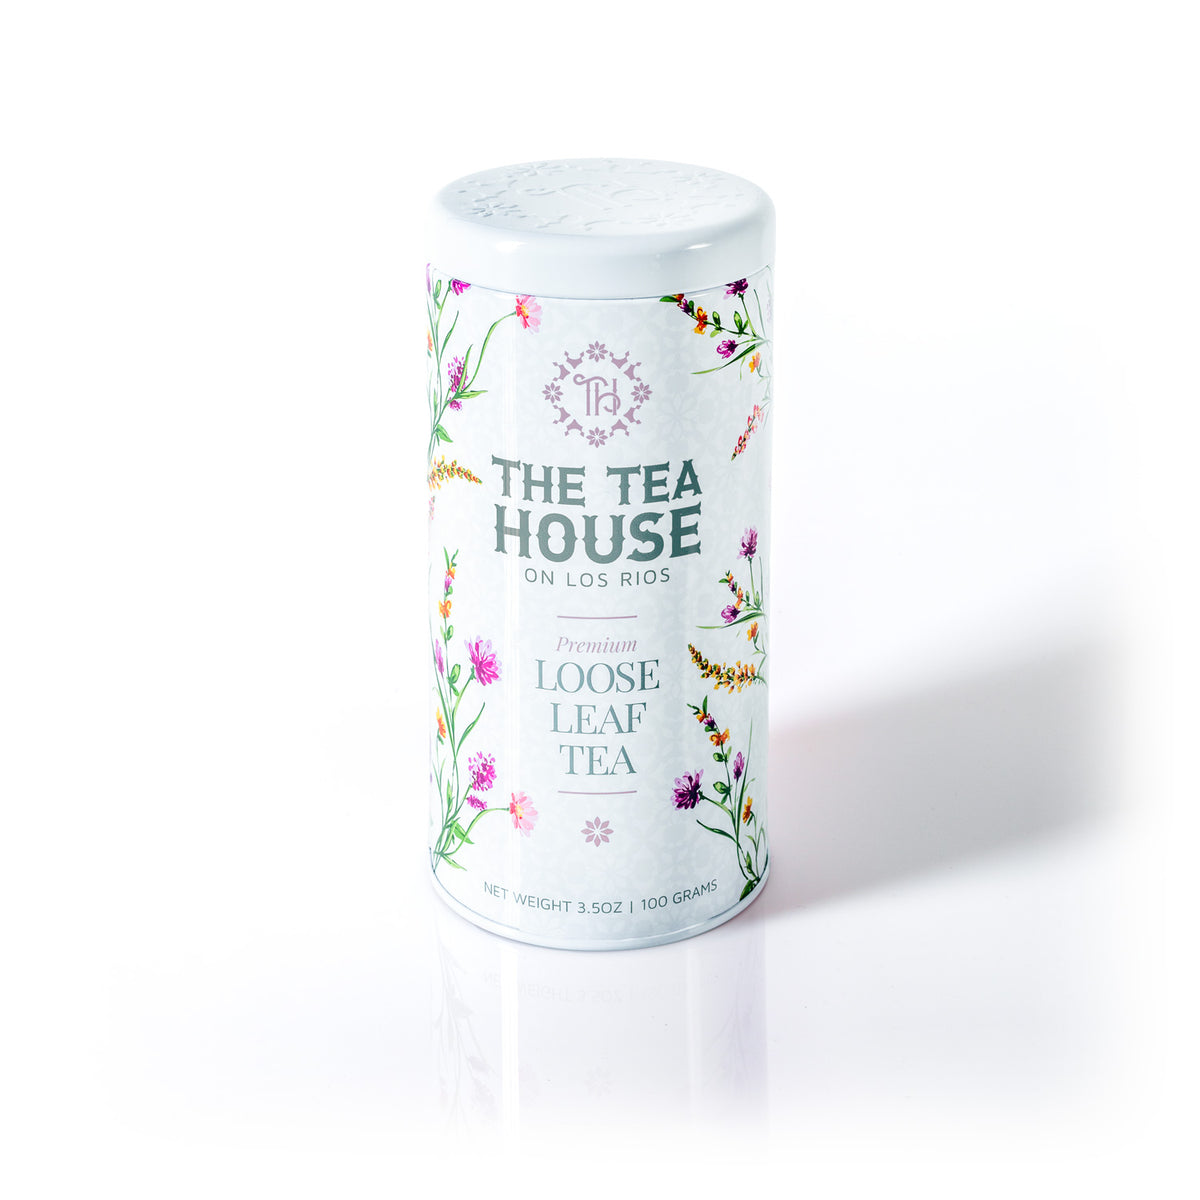 100g Loose Leaf Tea Tin by The Tea House on Los Rios - NEW Arrivals